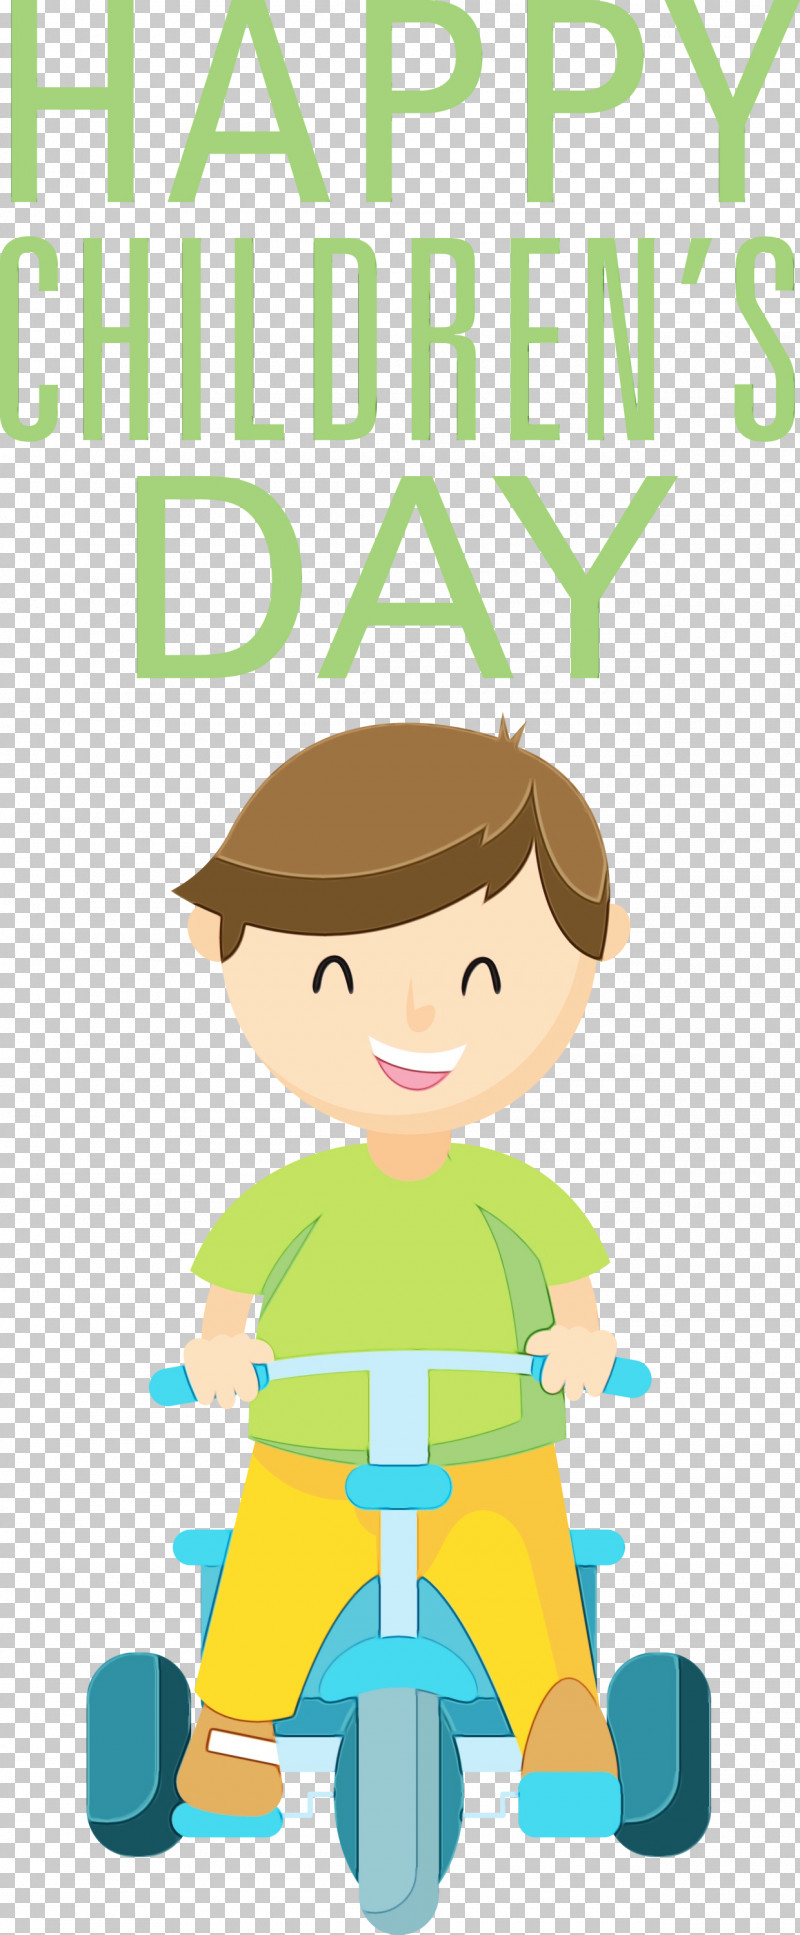 Human Cartoon Behavior Meter Happiness PNG, Clipart, Behavior, Cartoon, Childrens Day, Happiness, Human Free PNG Download